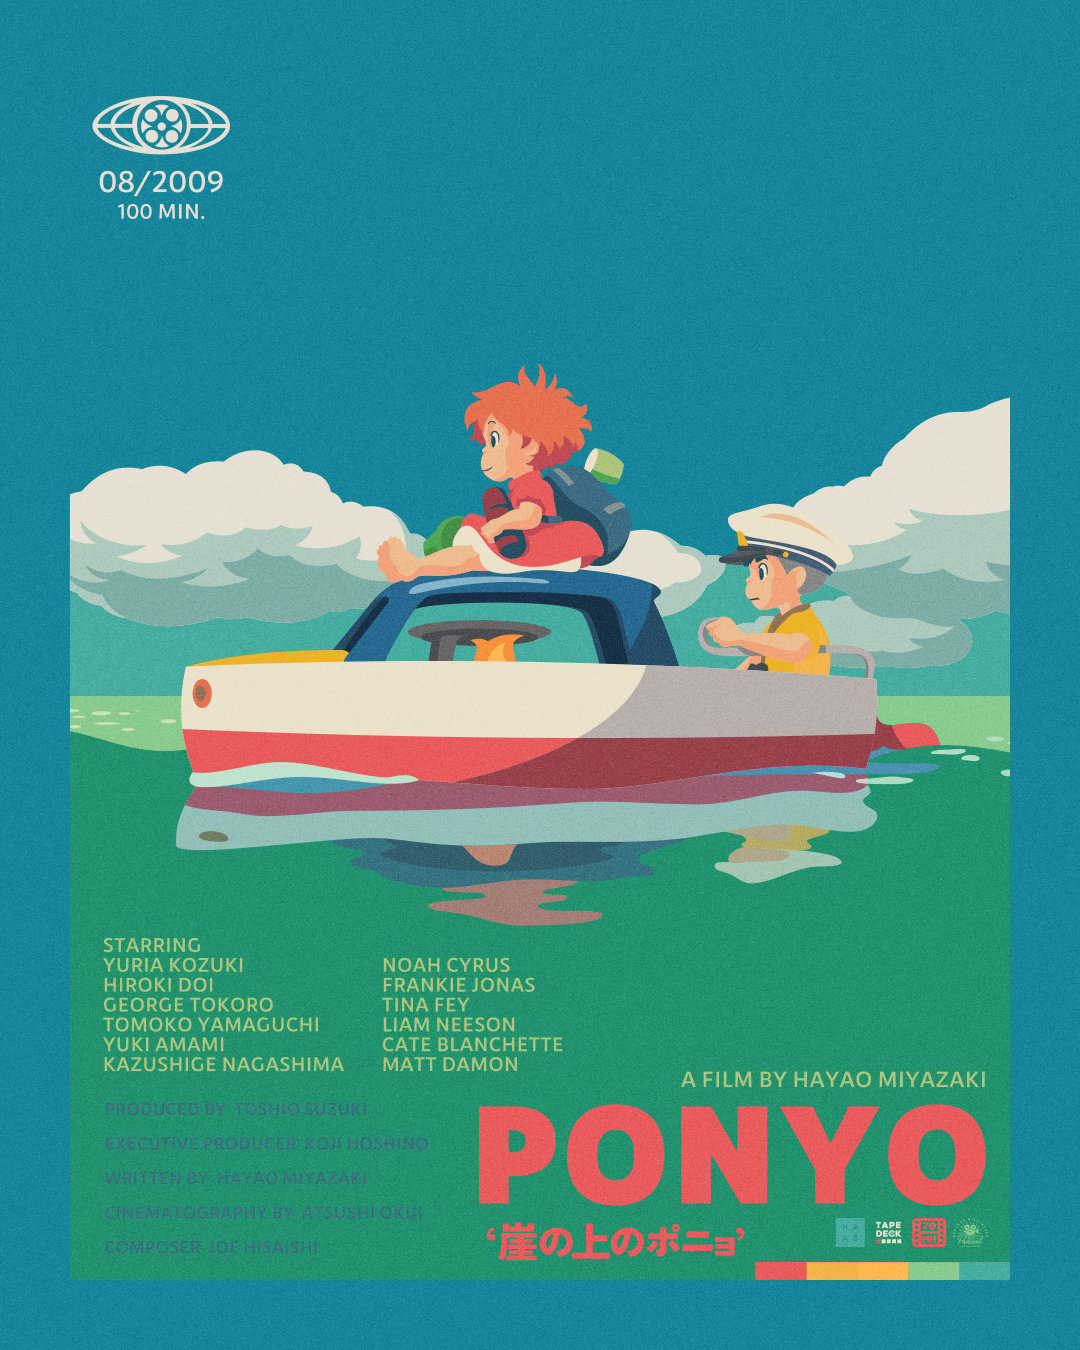 Bonus Episode Ponyo